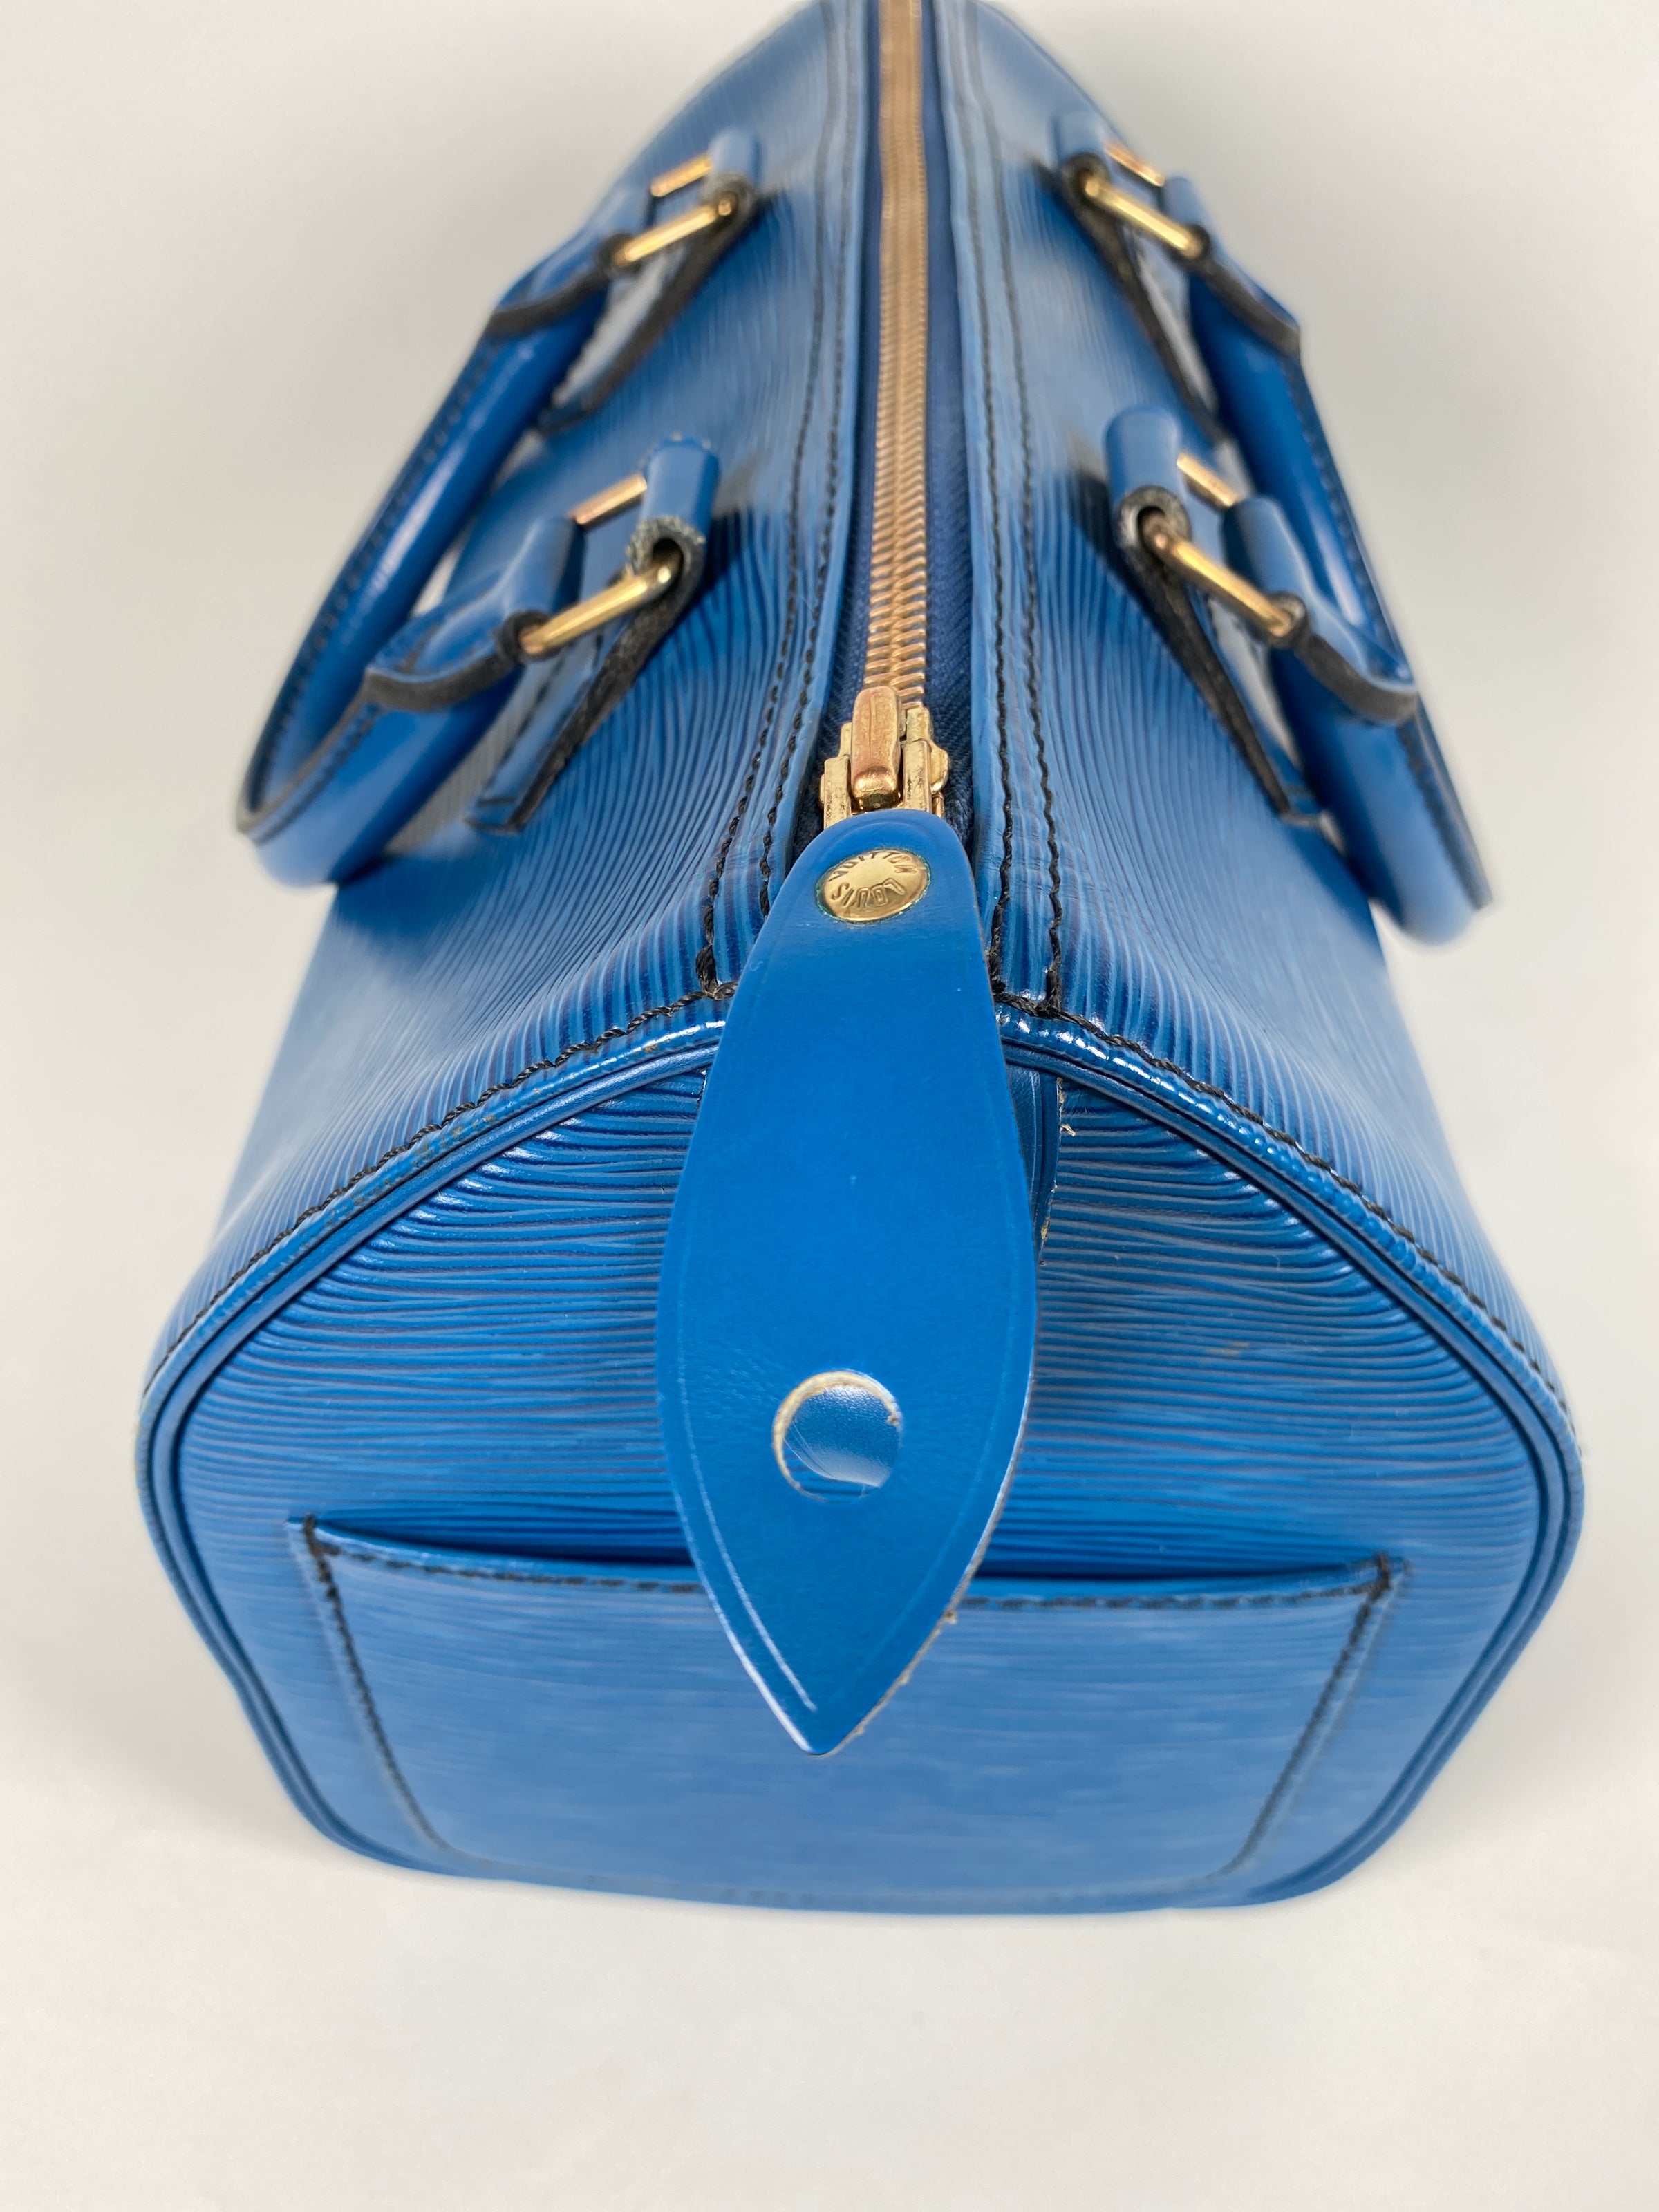 Louis Vuitton Epi Speedy 30 - Blue Handle Bags, Handbags